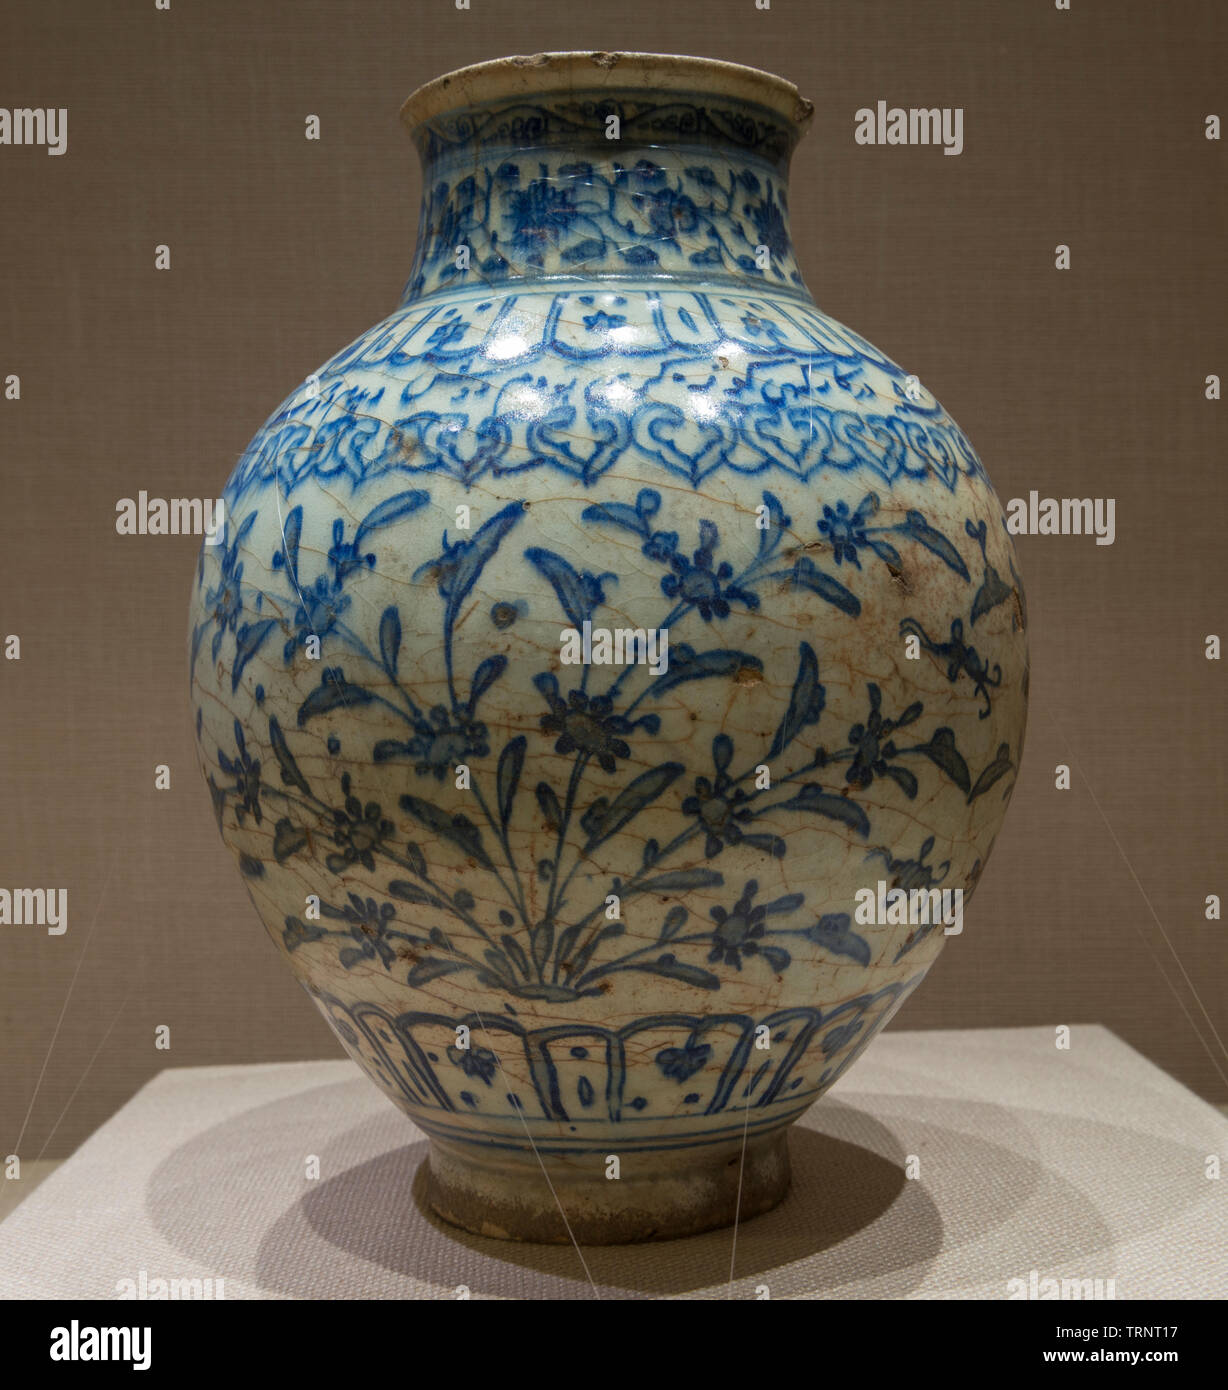 Blau und Weiß Porzellan Glas. 1563 AD, Safavid Dynastie. Provinz Isfahan, Iran. Iran National Museum. Stockfoto